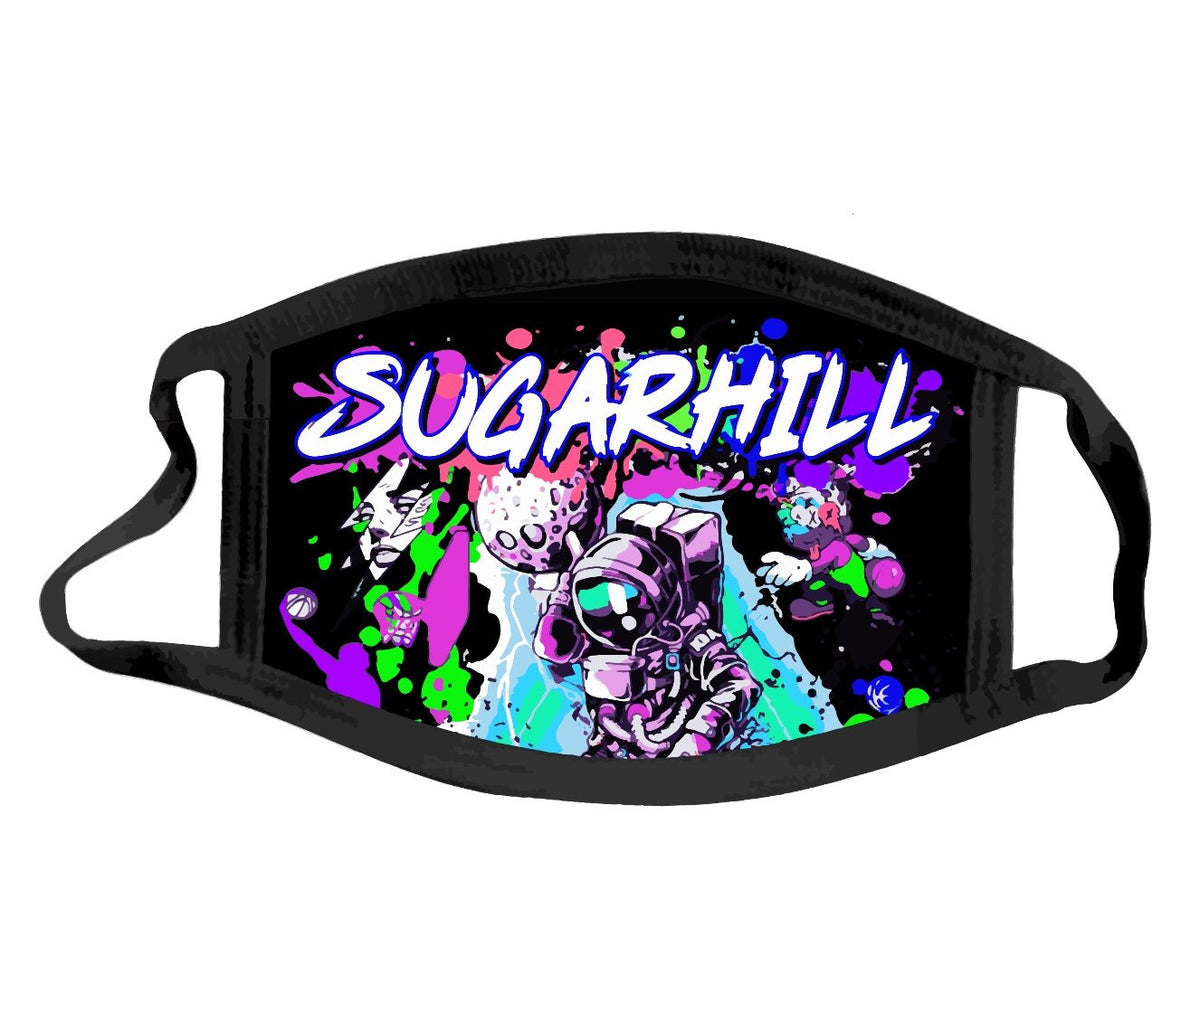 Sugarhill-Space Jam Mask-Black